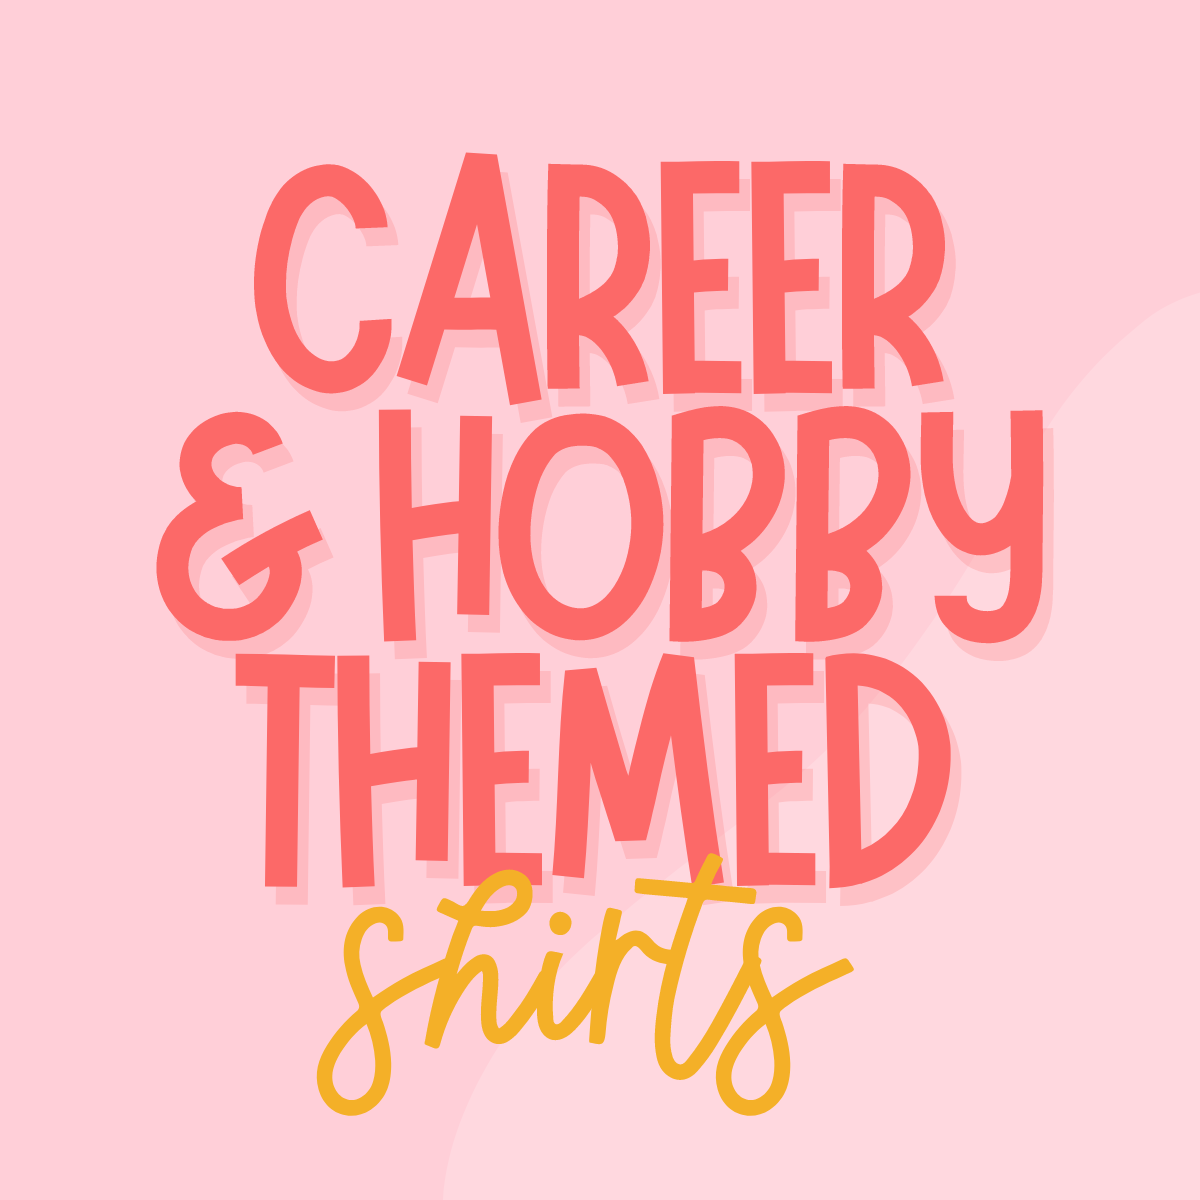 Career & Hobby Themed Shirts